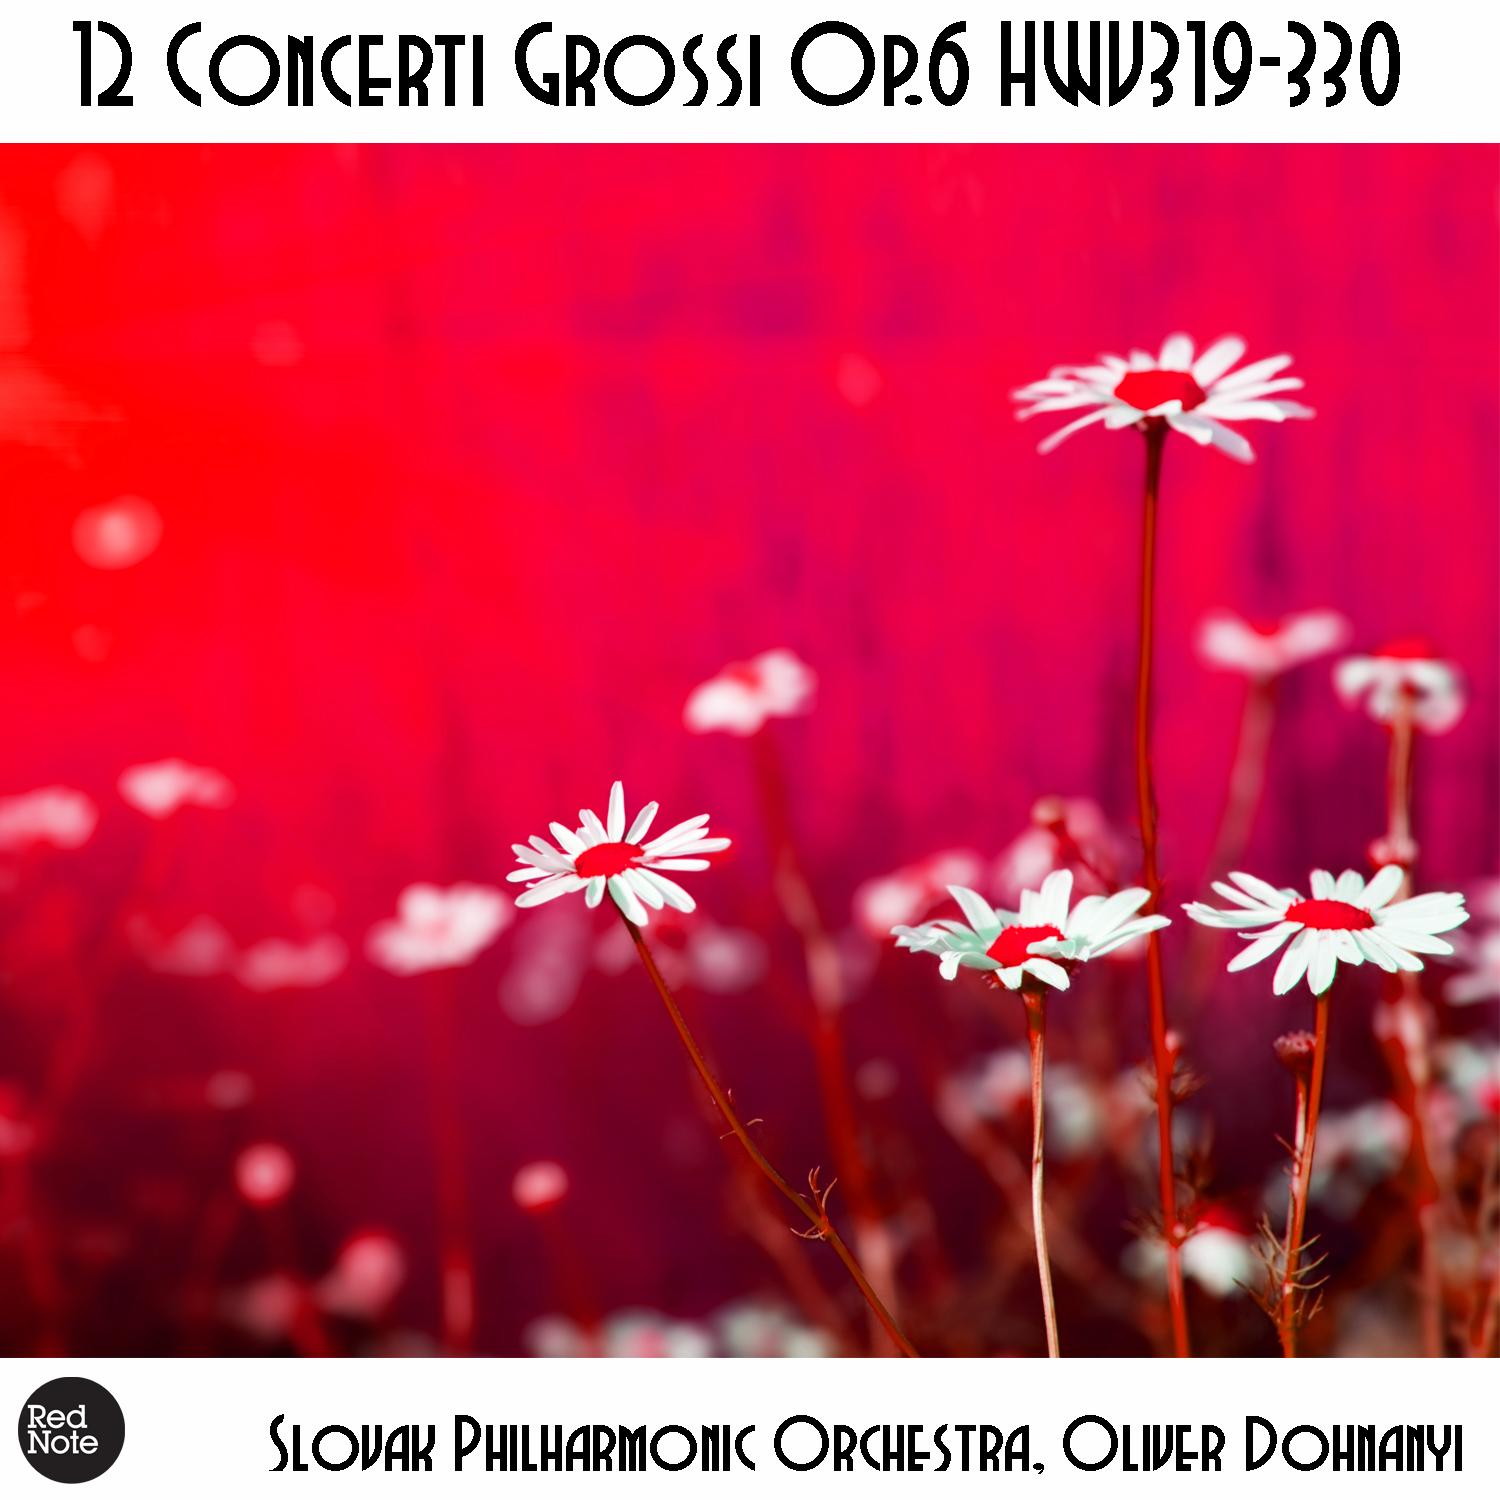 Concerti Grossi No. 8, Op. 6 HWV326: VI. Allegro